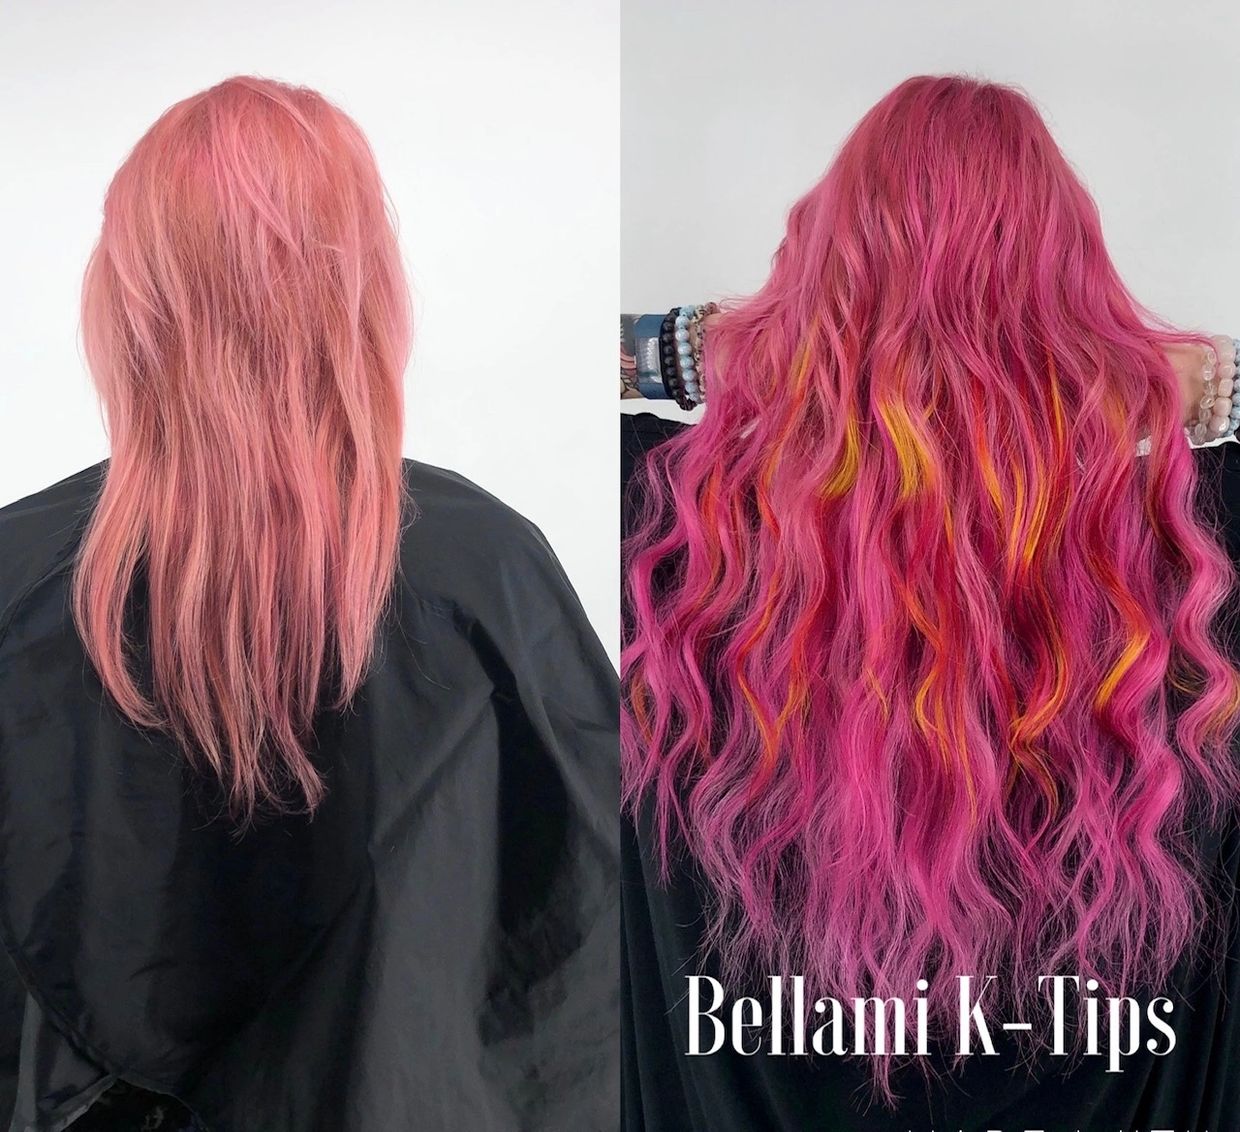 bellami k-tips hair extension